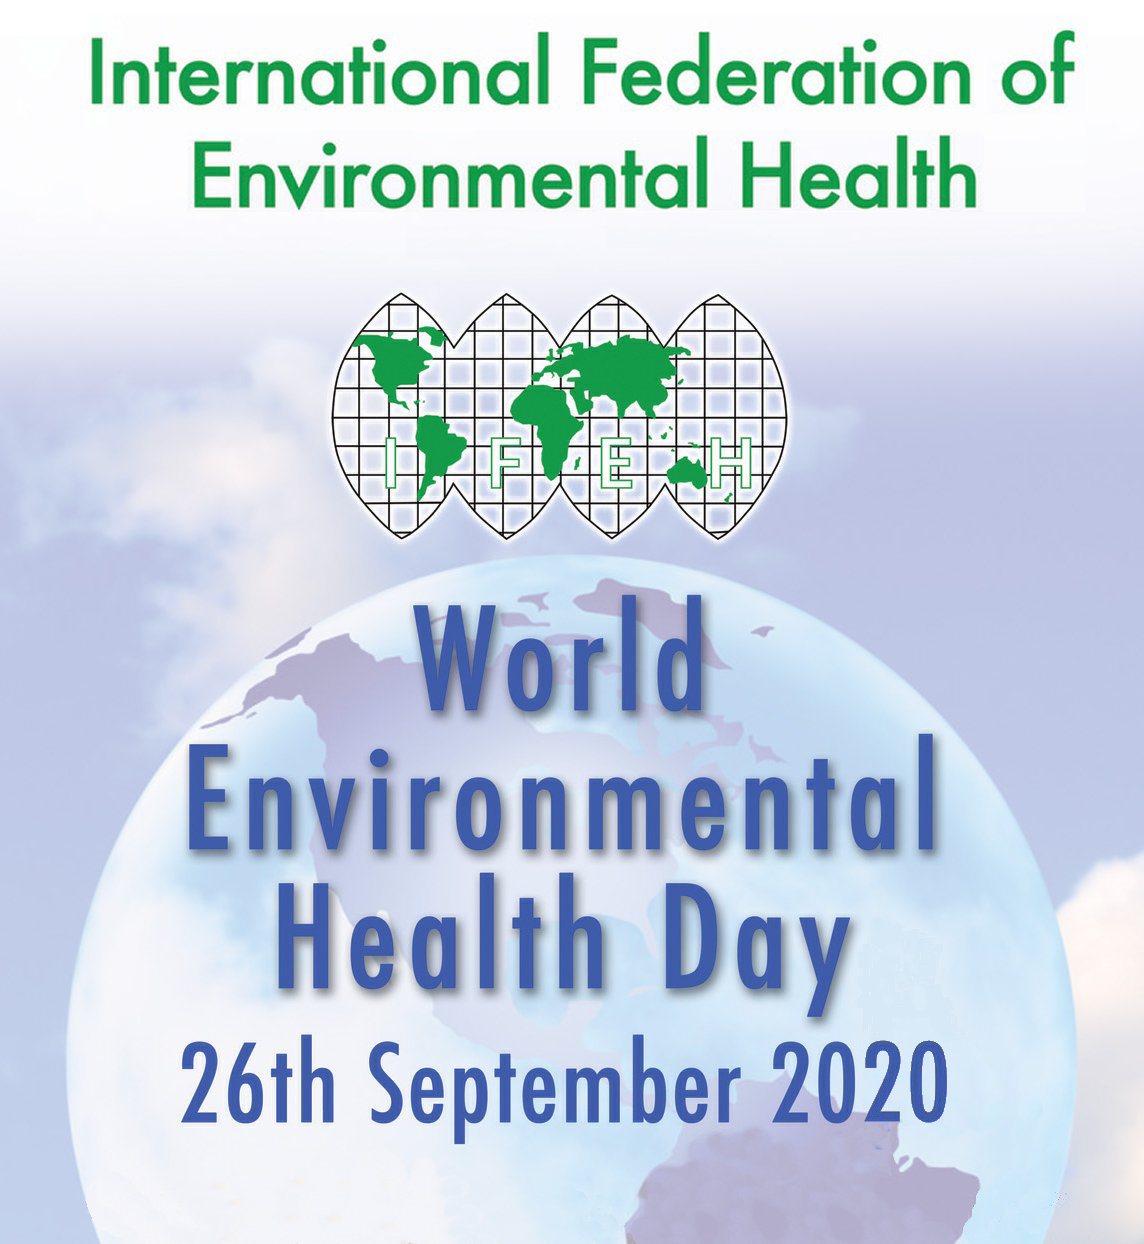 speech on world environmental health day